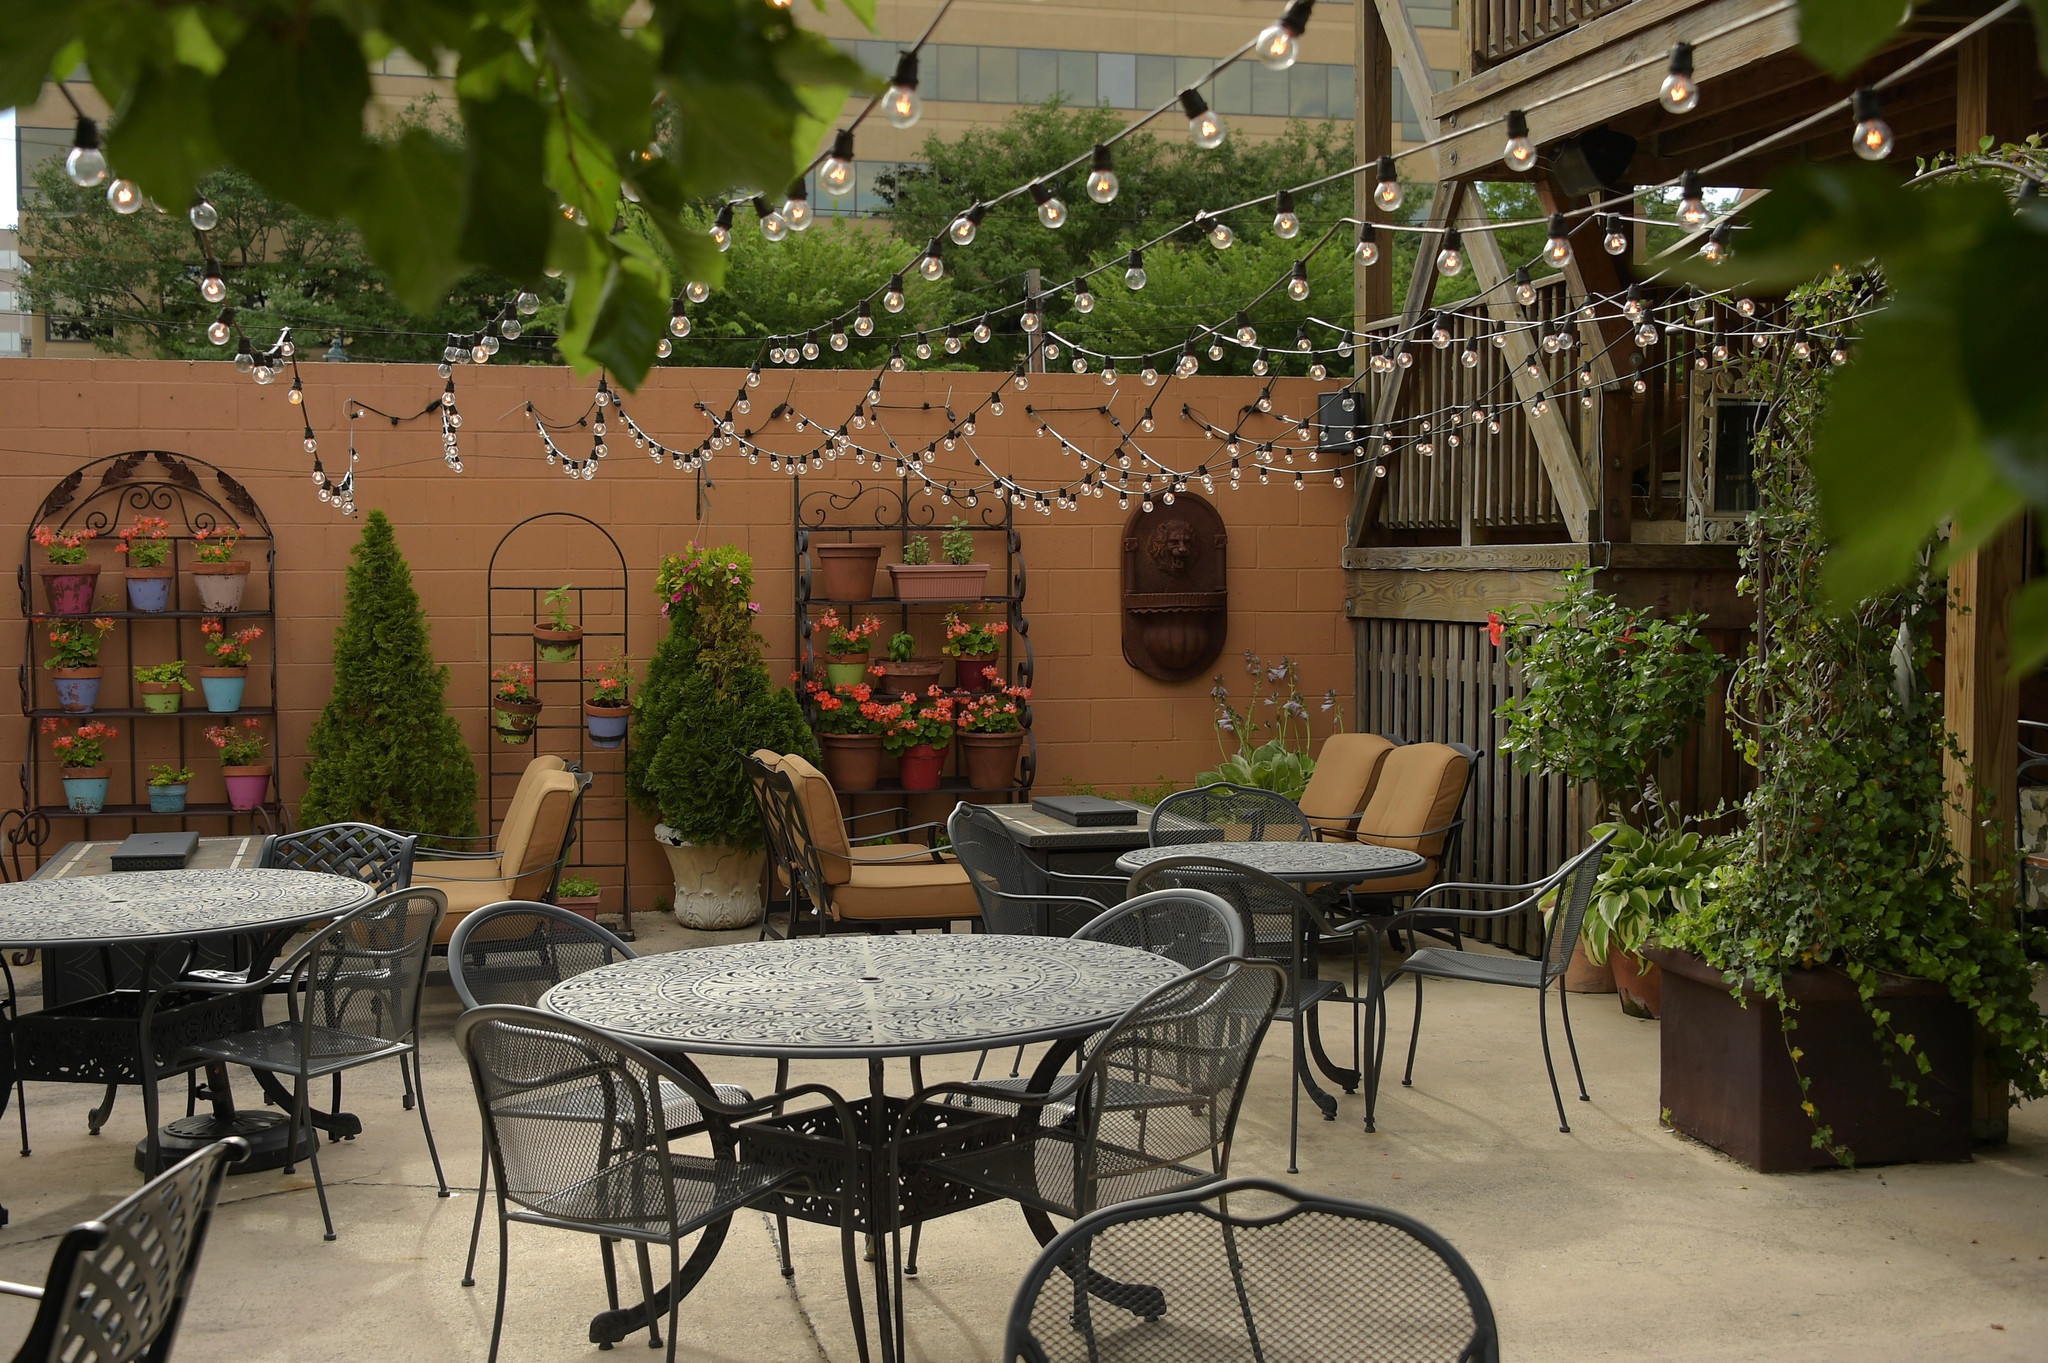 Hot spots: Restaurants create elaborate outdoor seating - Baltimore Sun